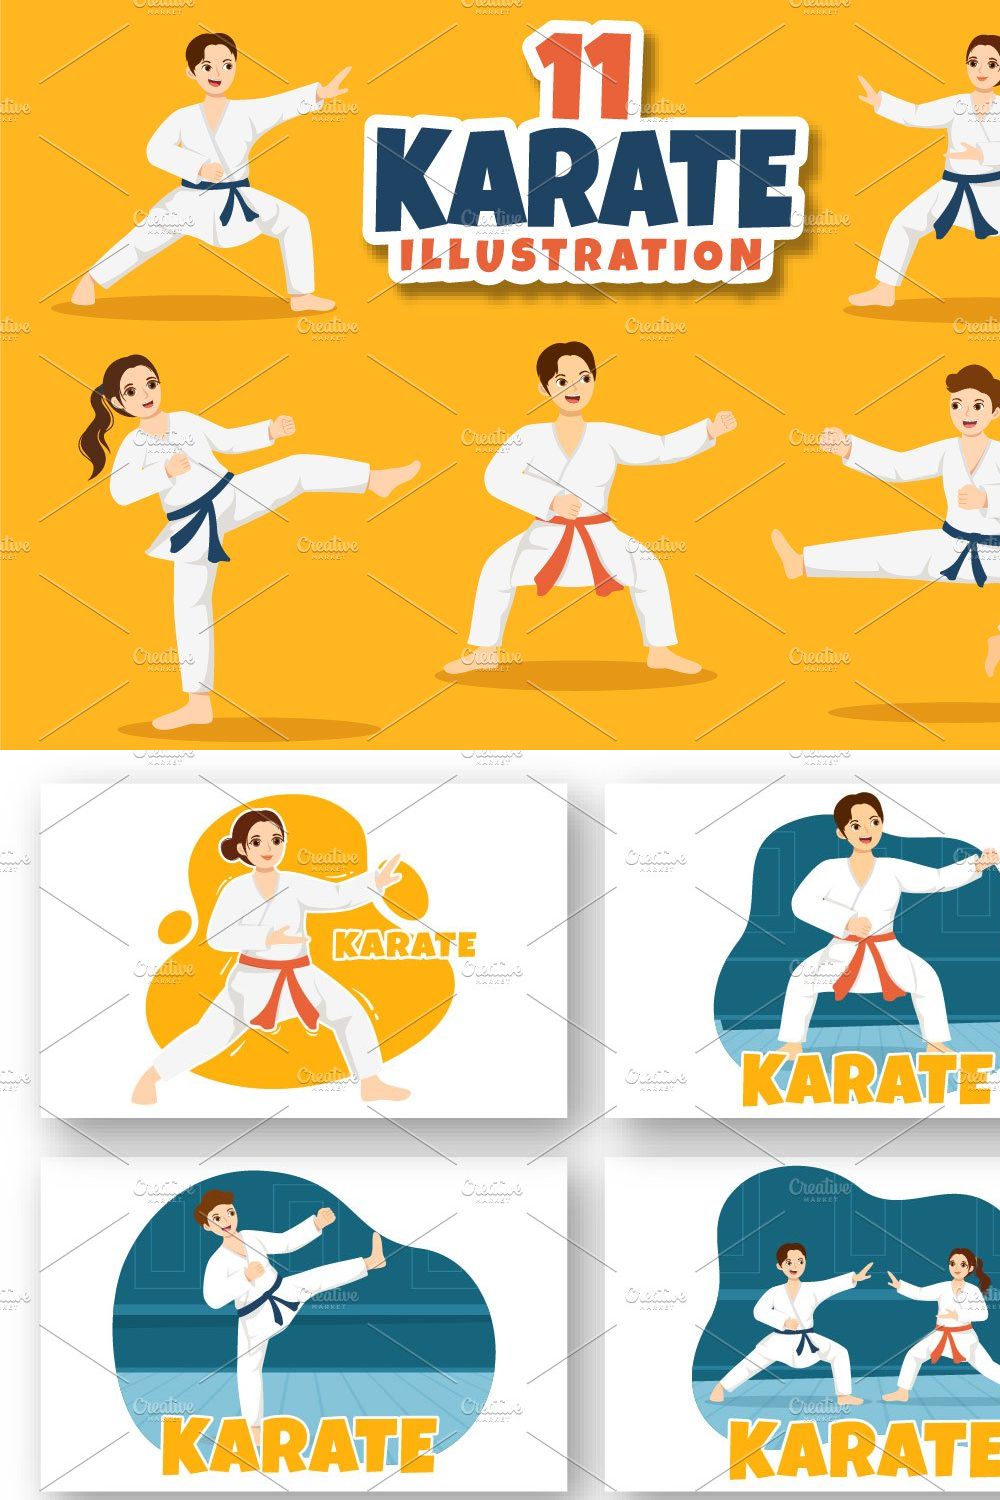 11 Karate Martial Arts Illustration pinterest preview image.